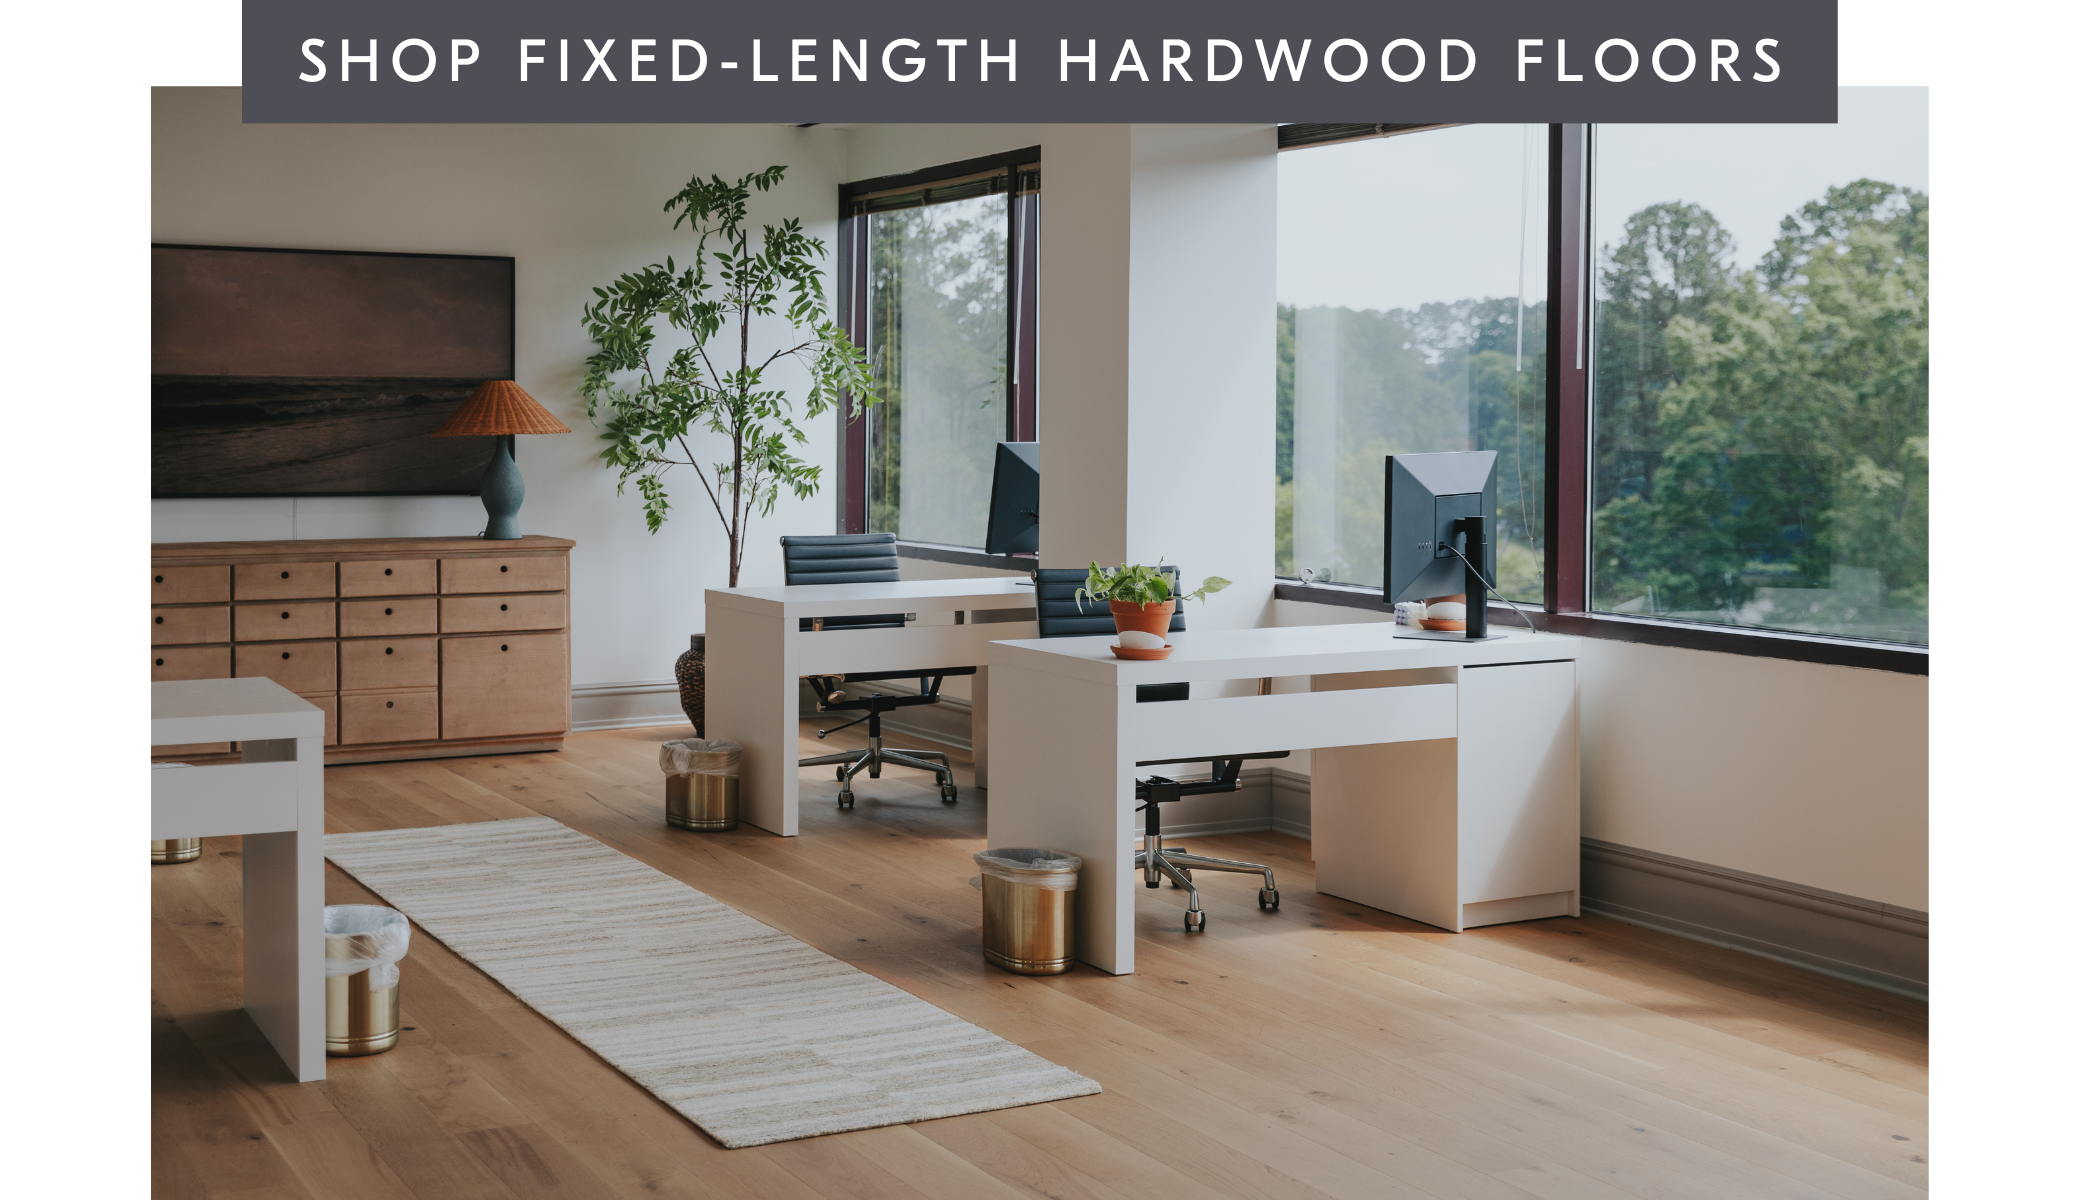 Shop fixed-length hardwood floors